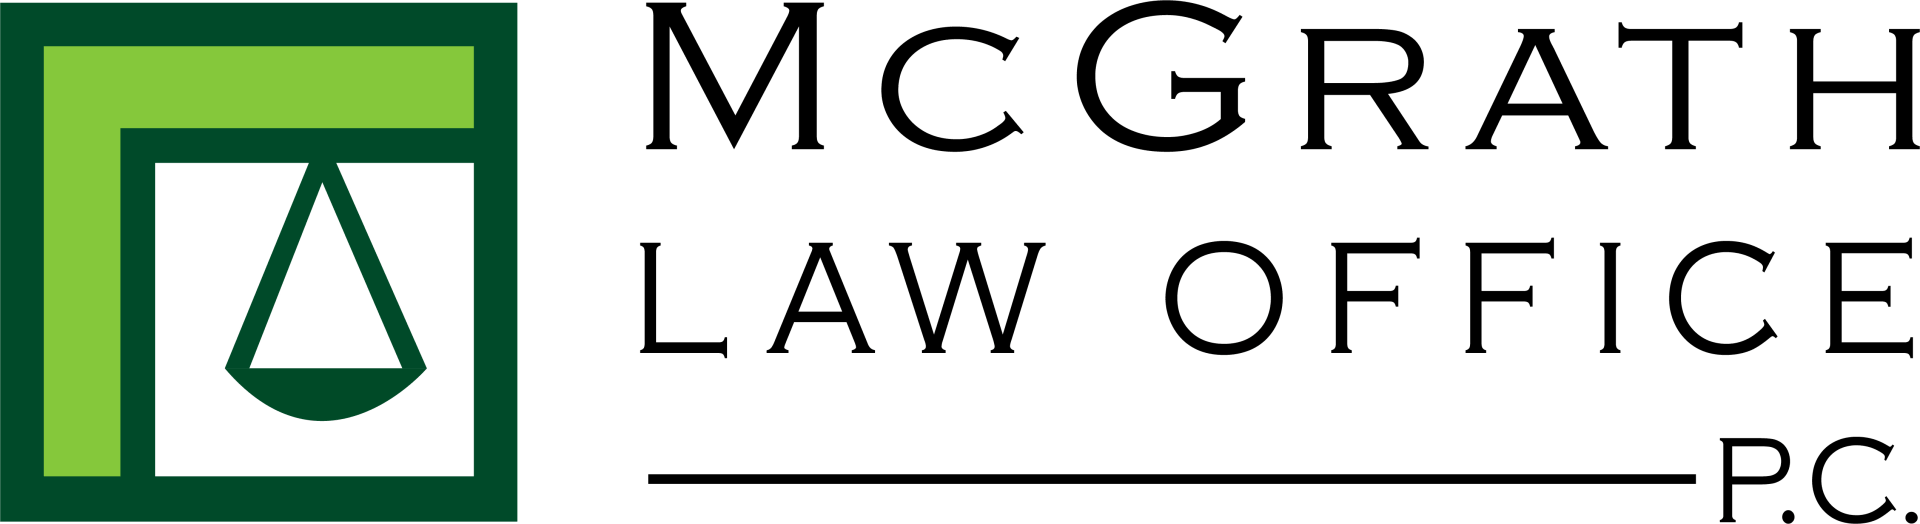 Home | McGrath Law Office, P.C. | Mackinaw, Illinois